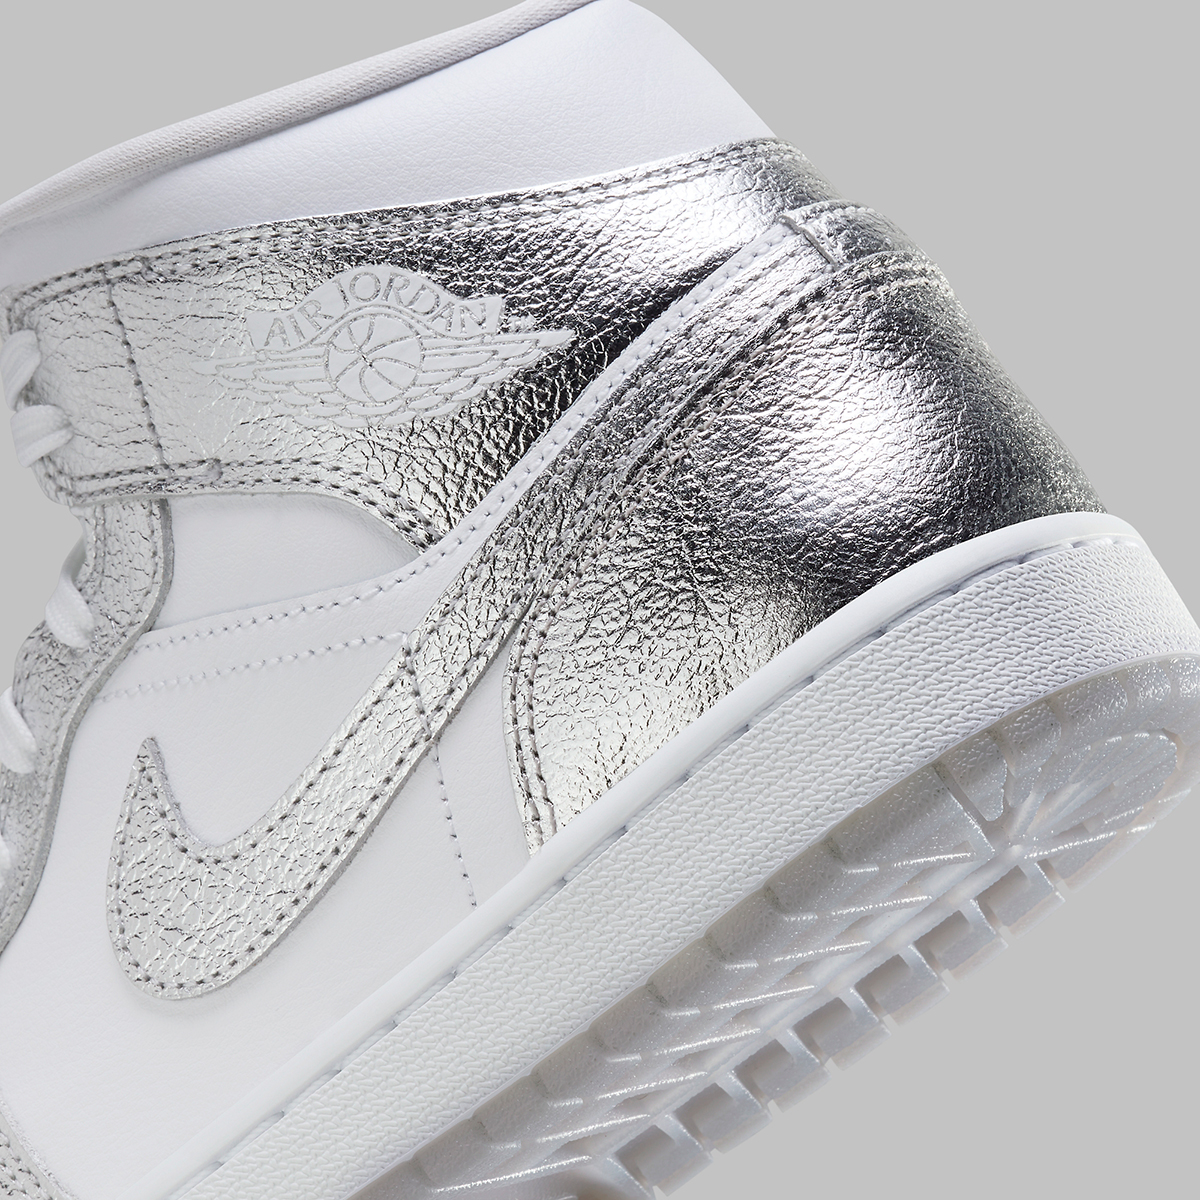 Noir Jordan stretched Autres chaussures Crinkled Silver Foil Fn5031 100 2